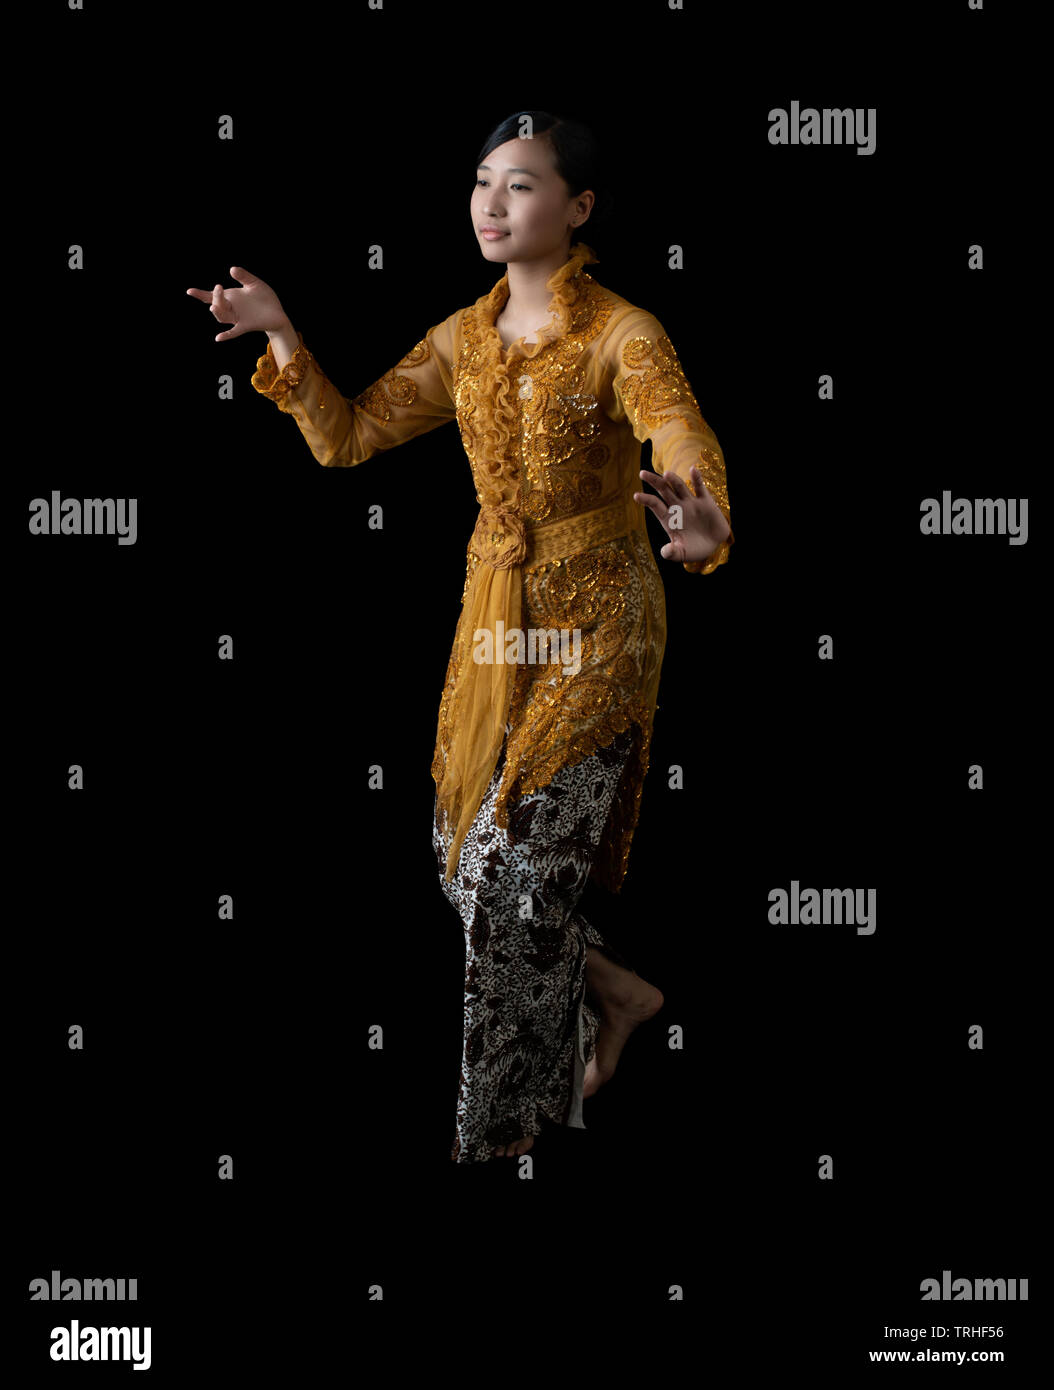 Indonesian Girl Performing Javanese Dance Wearing Traditional Dress Stock Photo